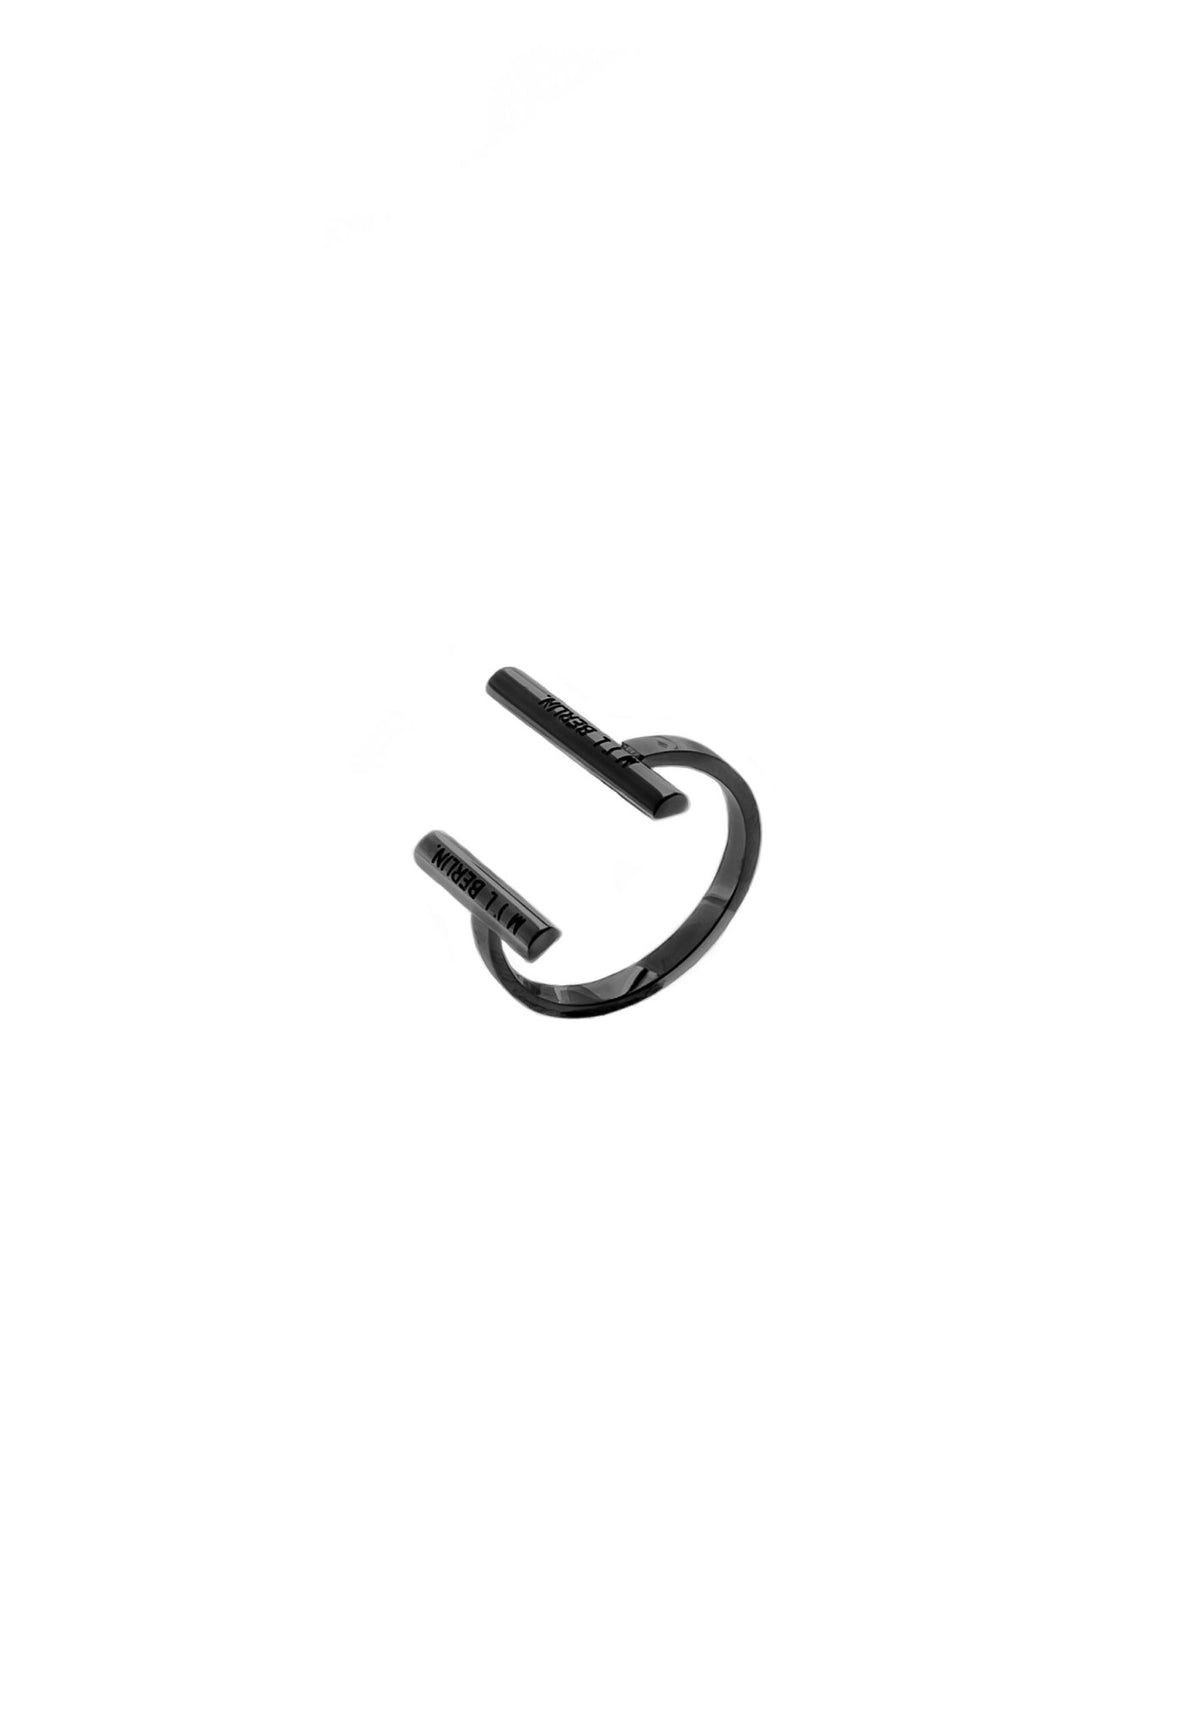 Adjustable Fit Ring "Versa" - MYL BERLIN - 4260654112726 - 4260654112726